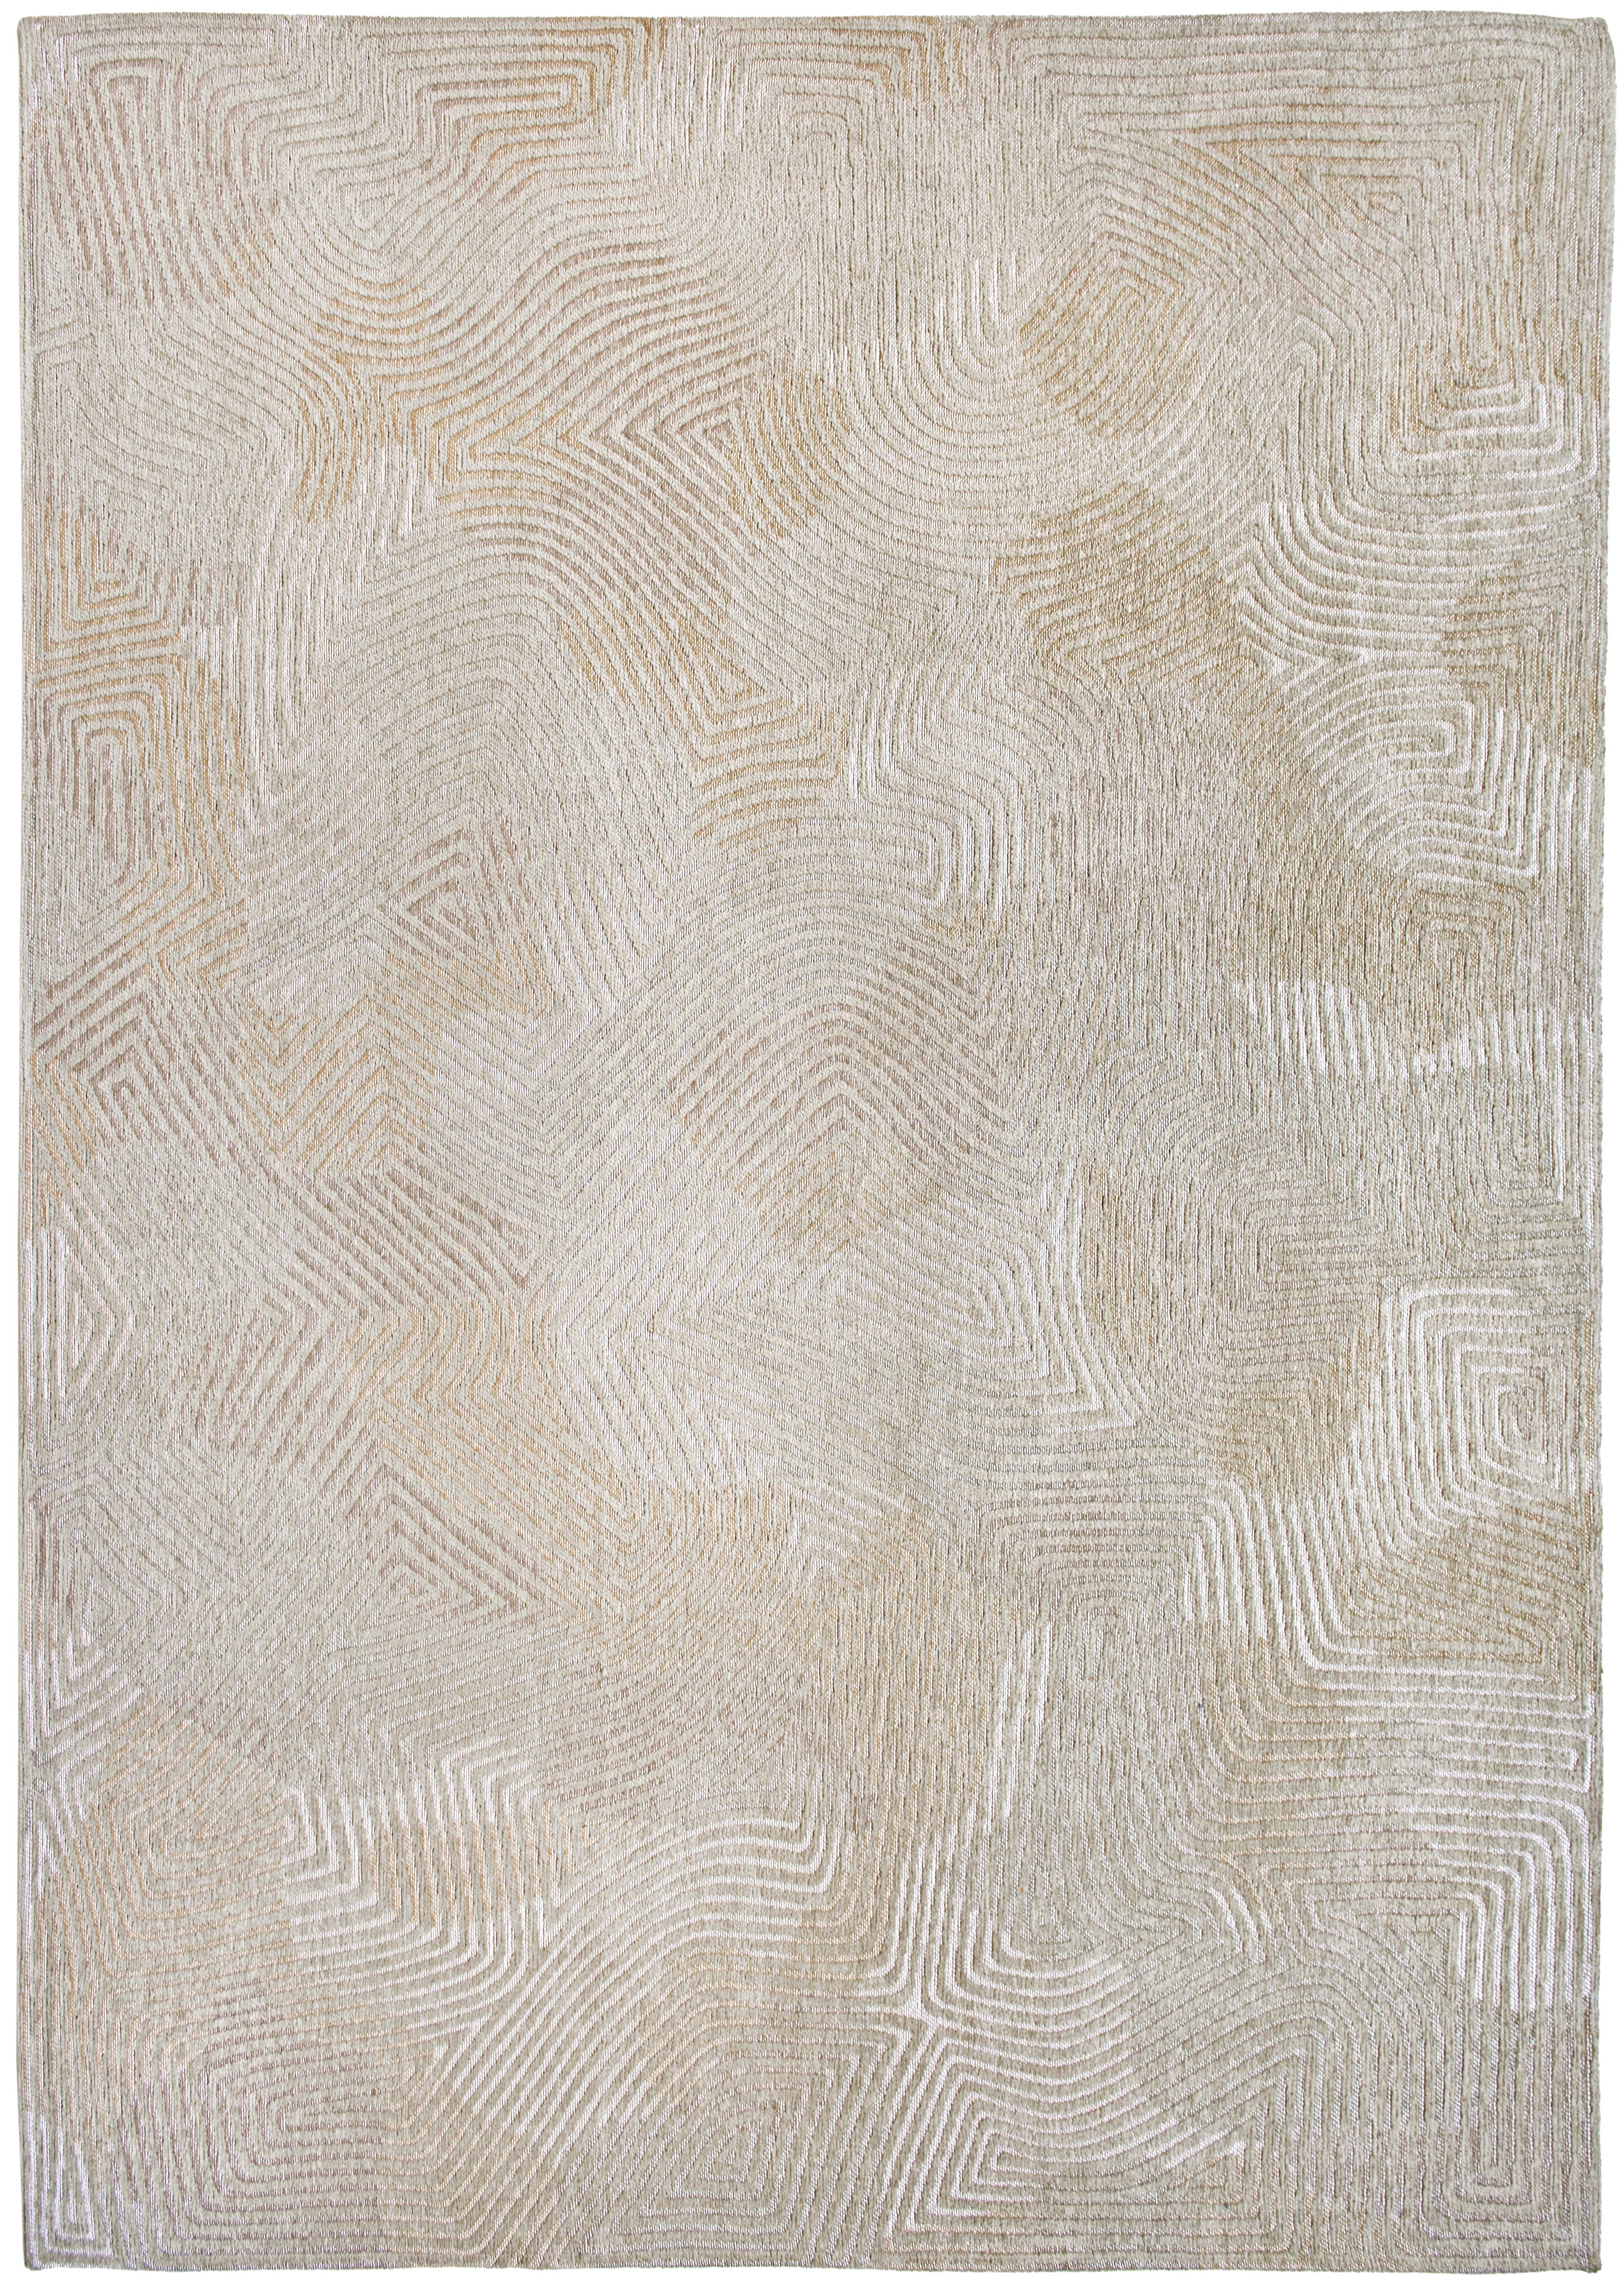 Beige flatweave runner area rug with organic, textured pattern